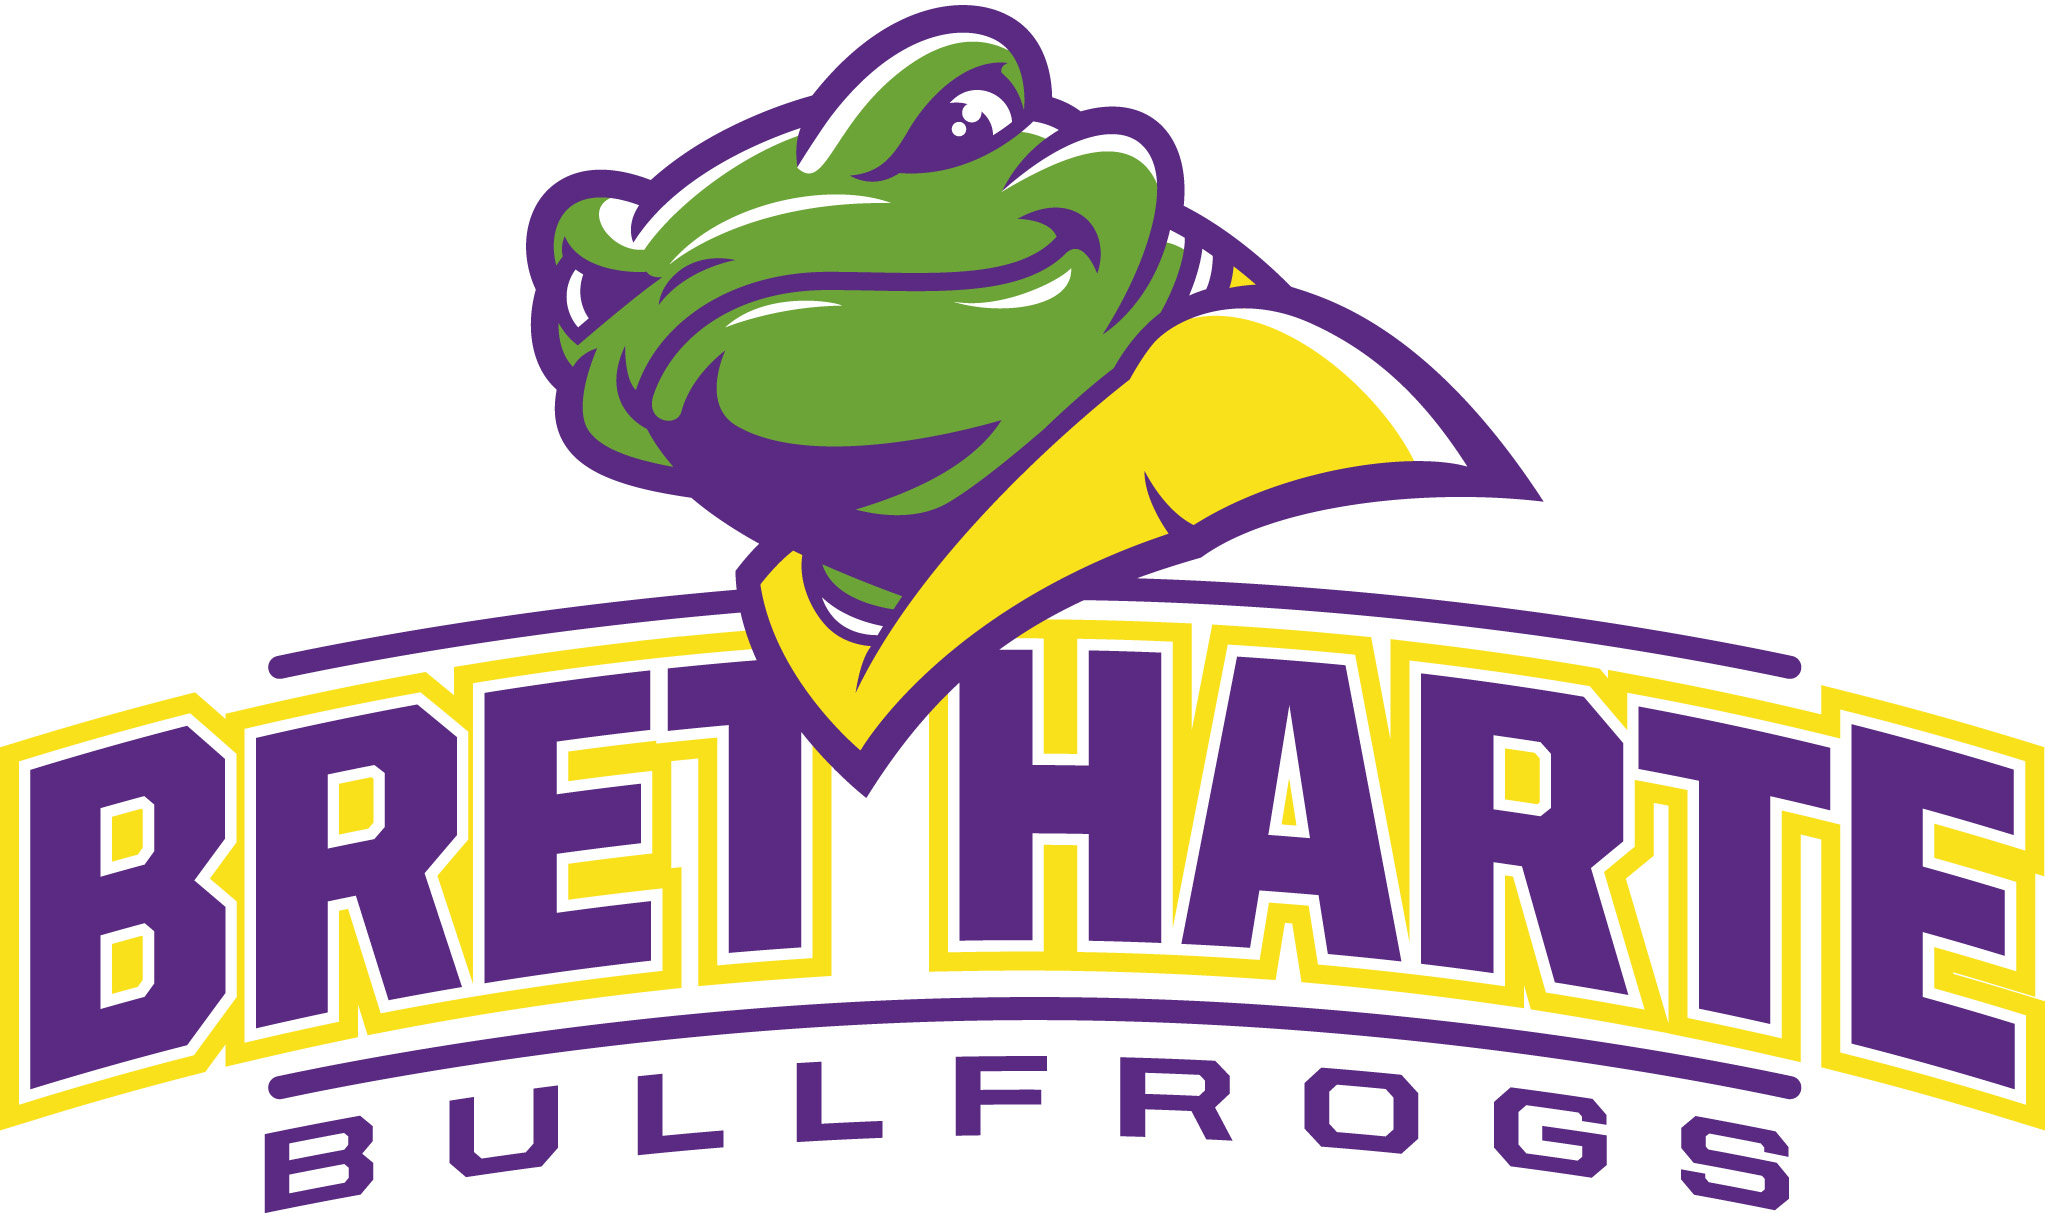 Bret Harte Bullfrogs logo